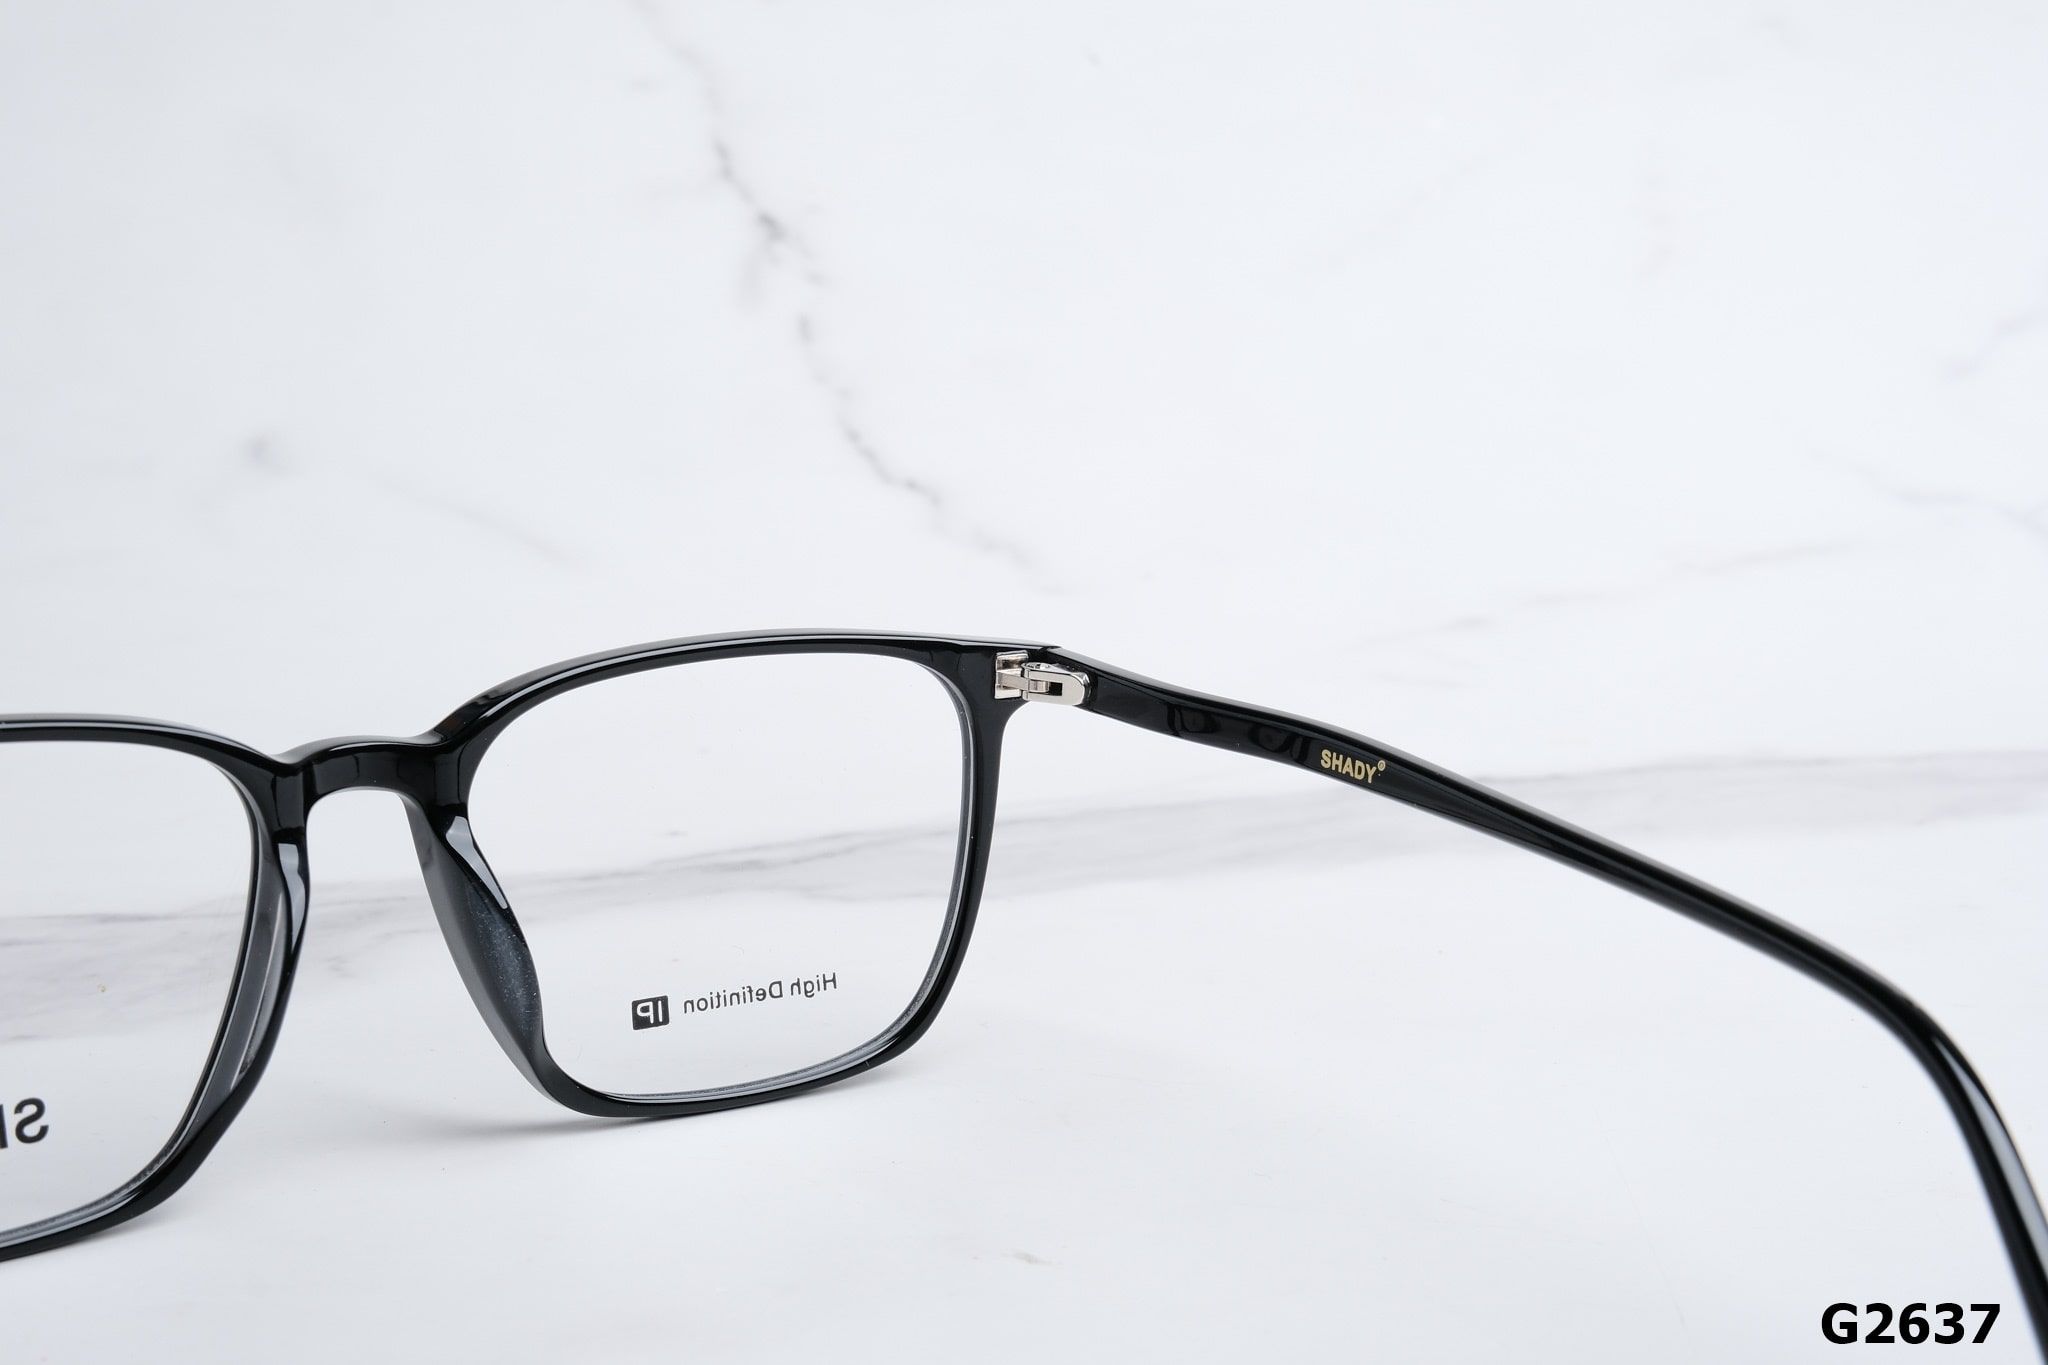  SHADY Eyewear - Glasses - G2637 